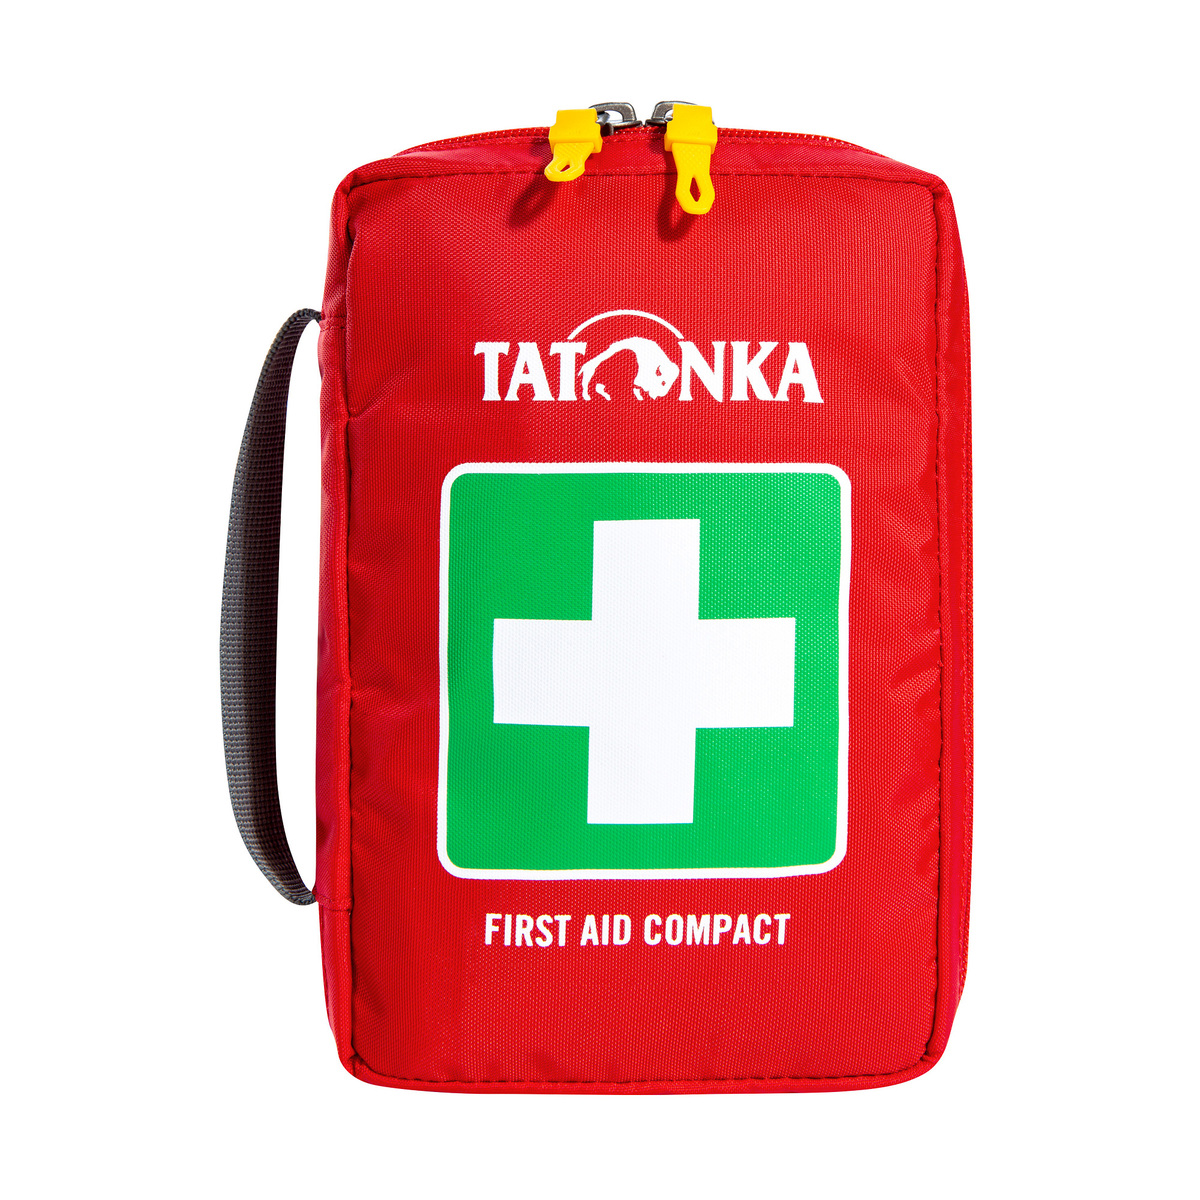  Tatonka First Aid Compact